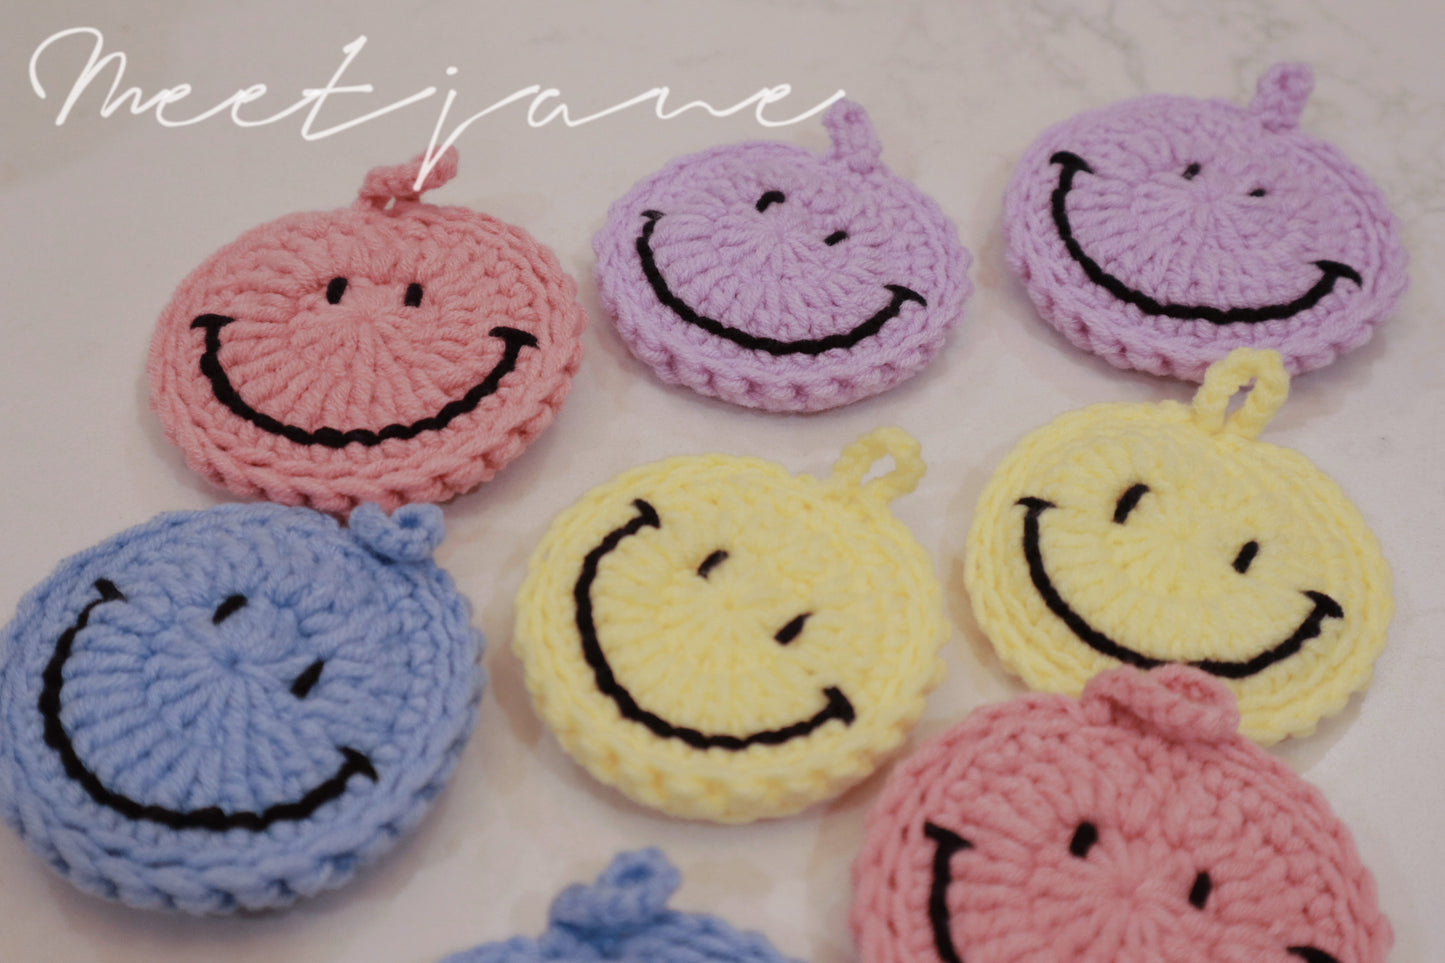 Crochet Accessories|Key chain|SMILE FACE